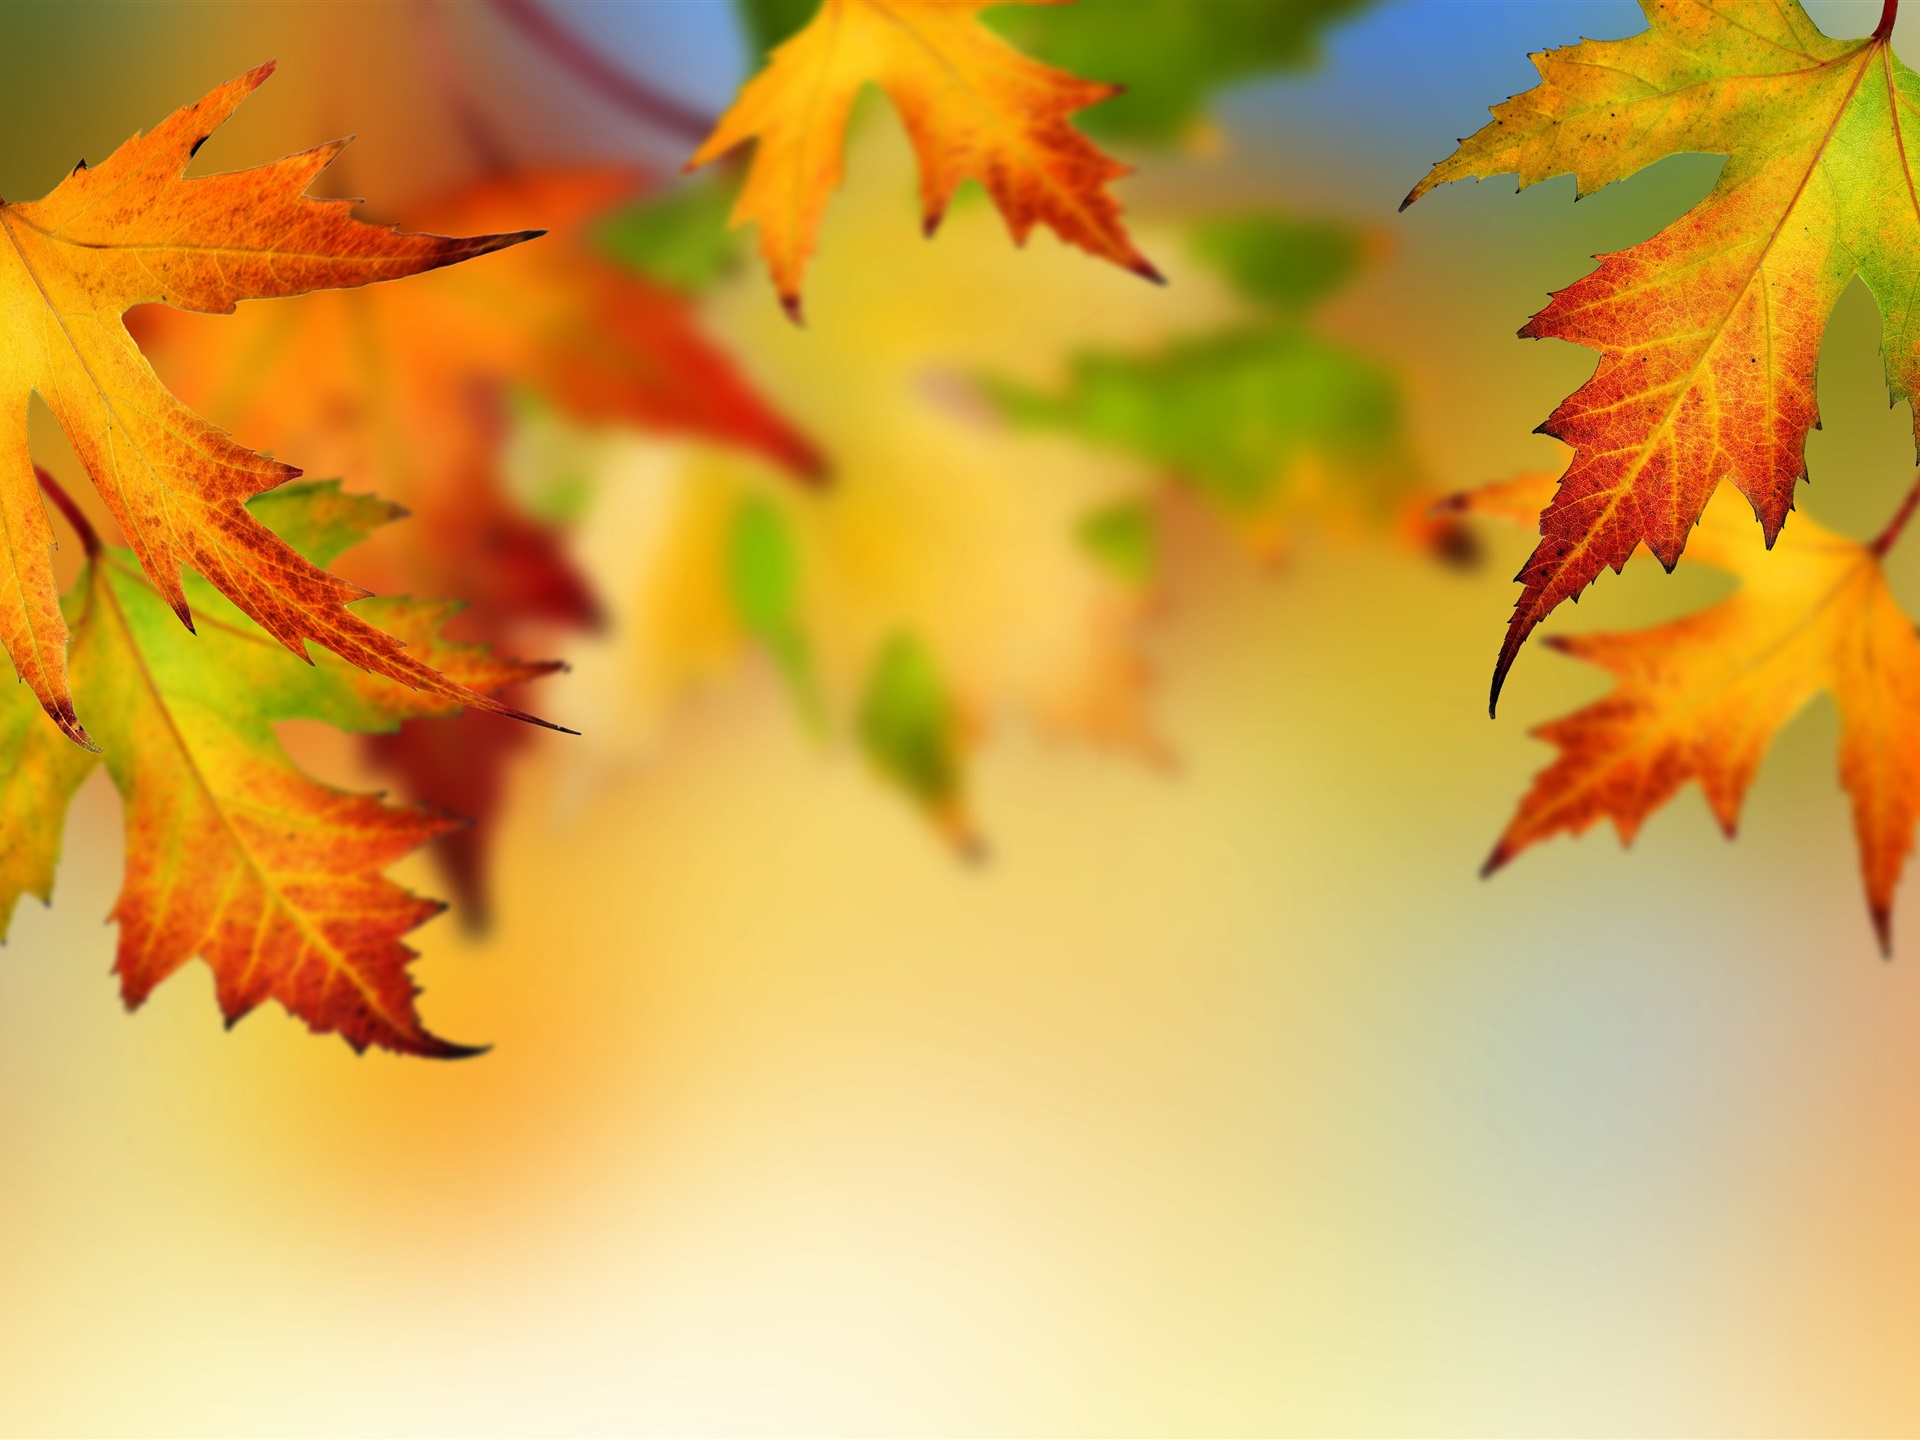 Autumn-maple-leaves-blurry-background_1920x1440.jpg